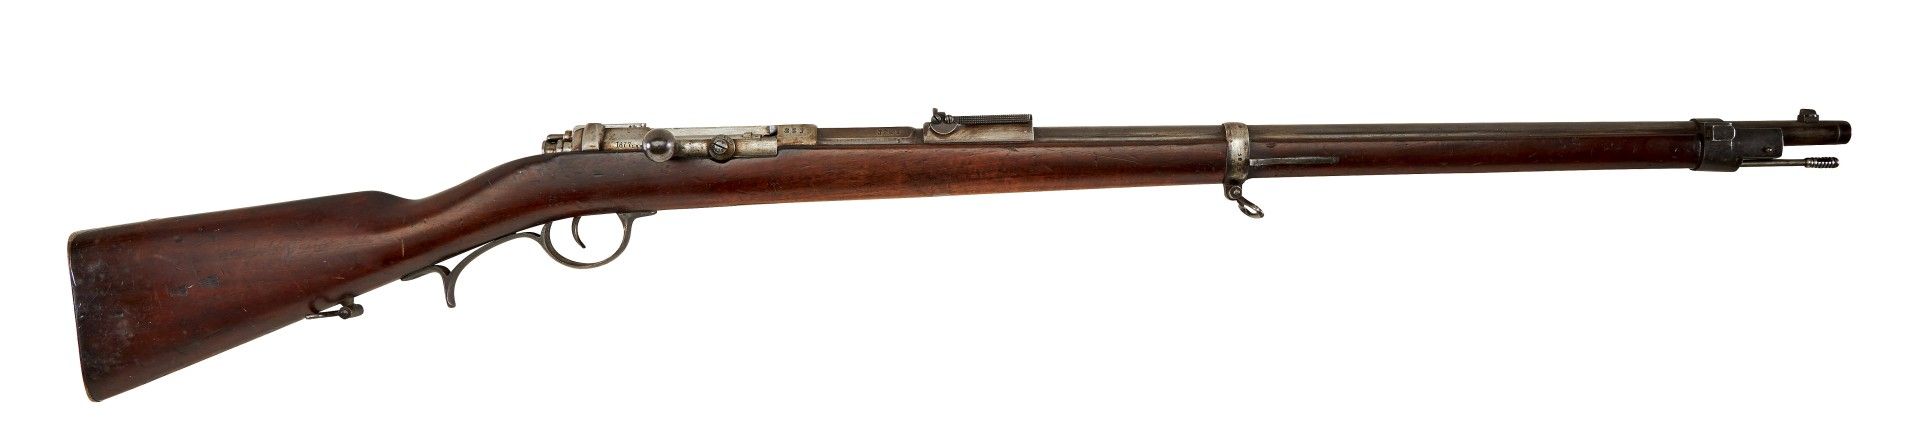 Jäger - Büchse M 71 Hersteller: Gewehrfabrik DANZIG Kal.: 11,15 x 60mm R S.Nr.: 5839 a nrgl.